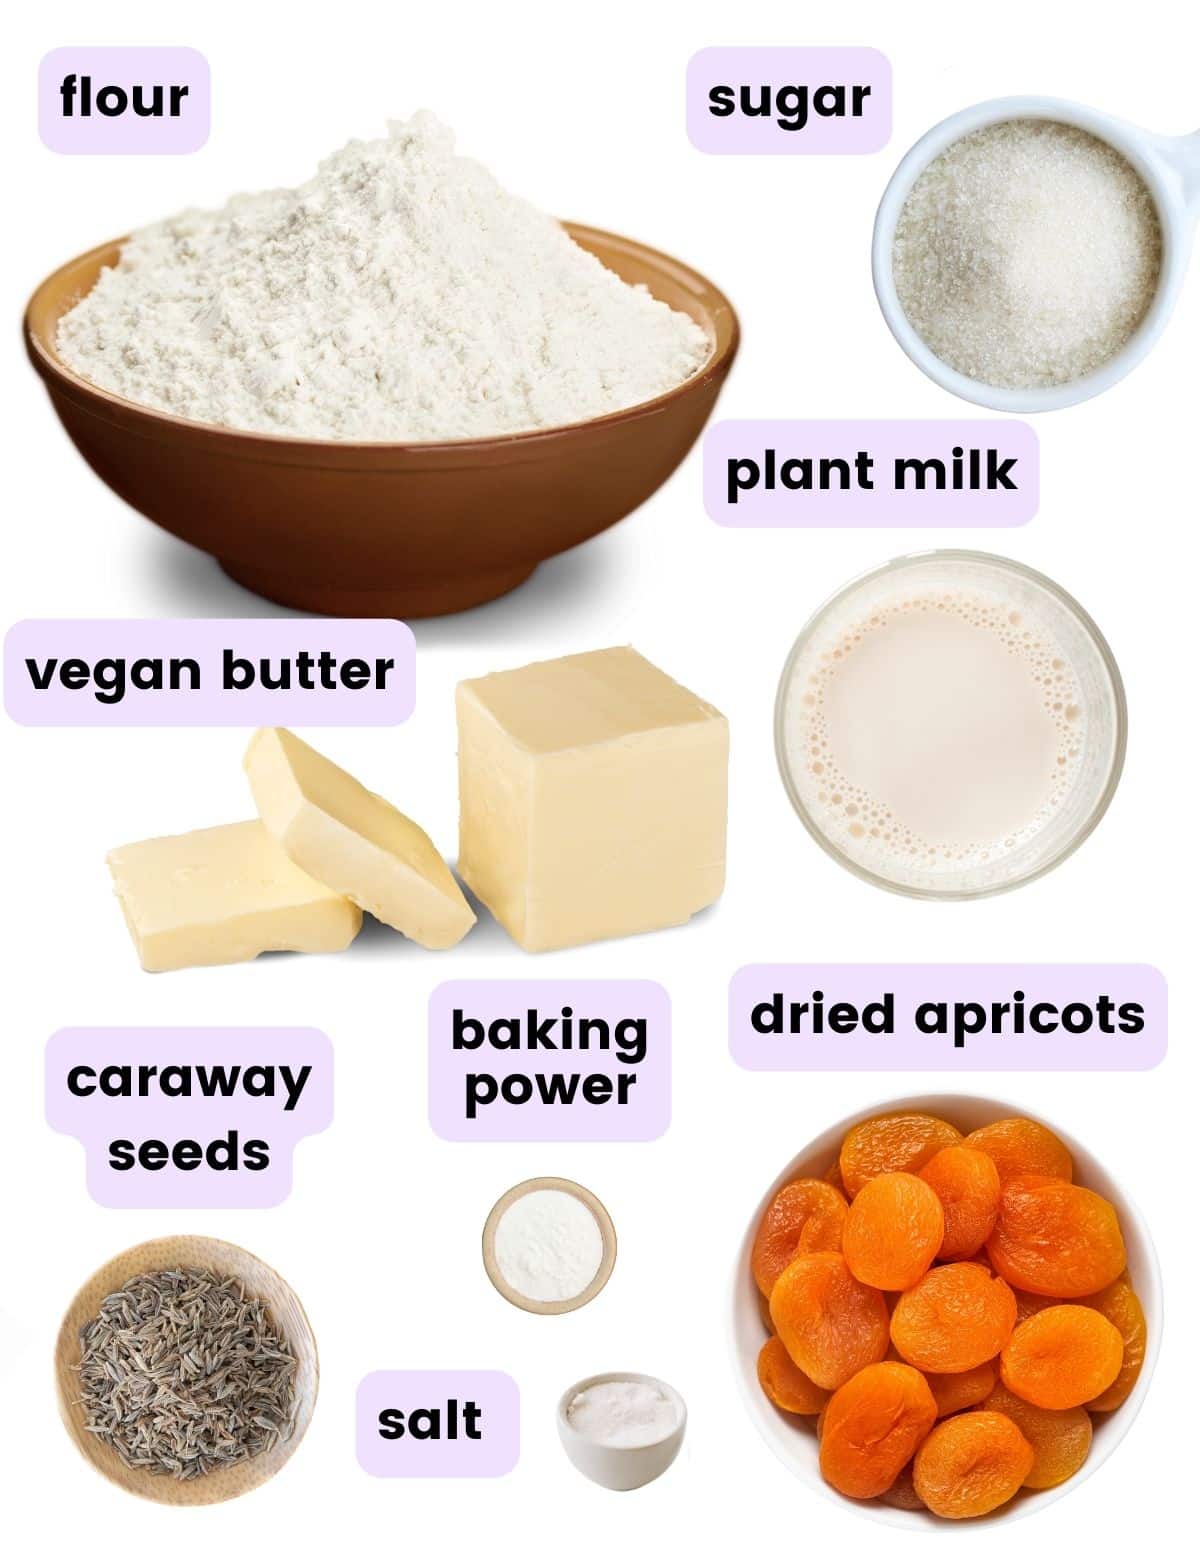 flour, sugar, plant milk. vegan butter, caraway seeds, baking powder, salt, apricot